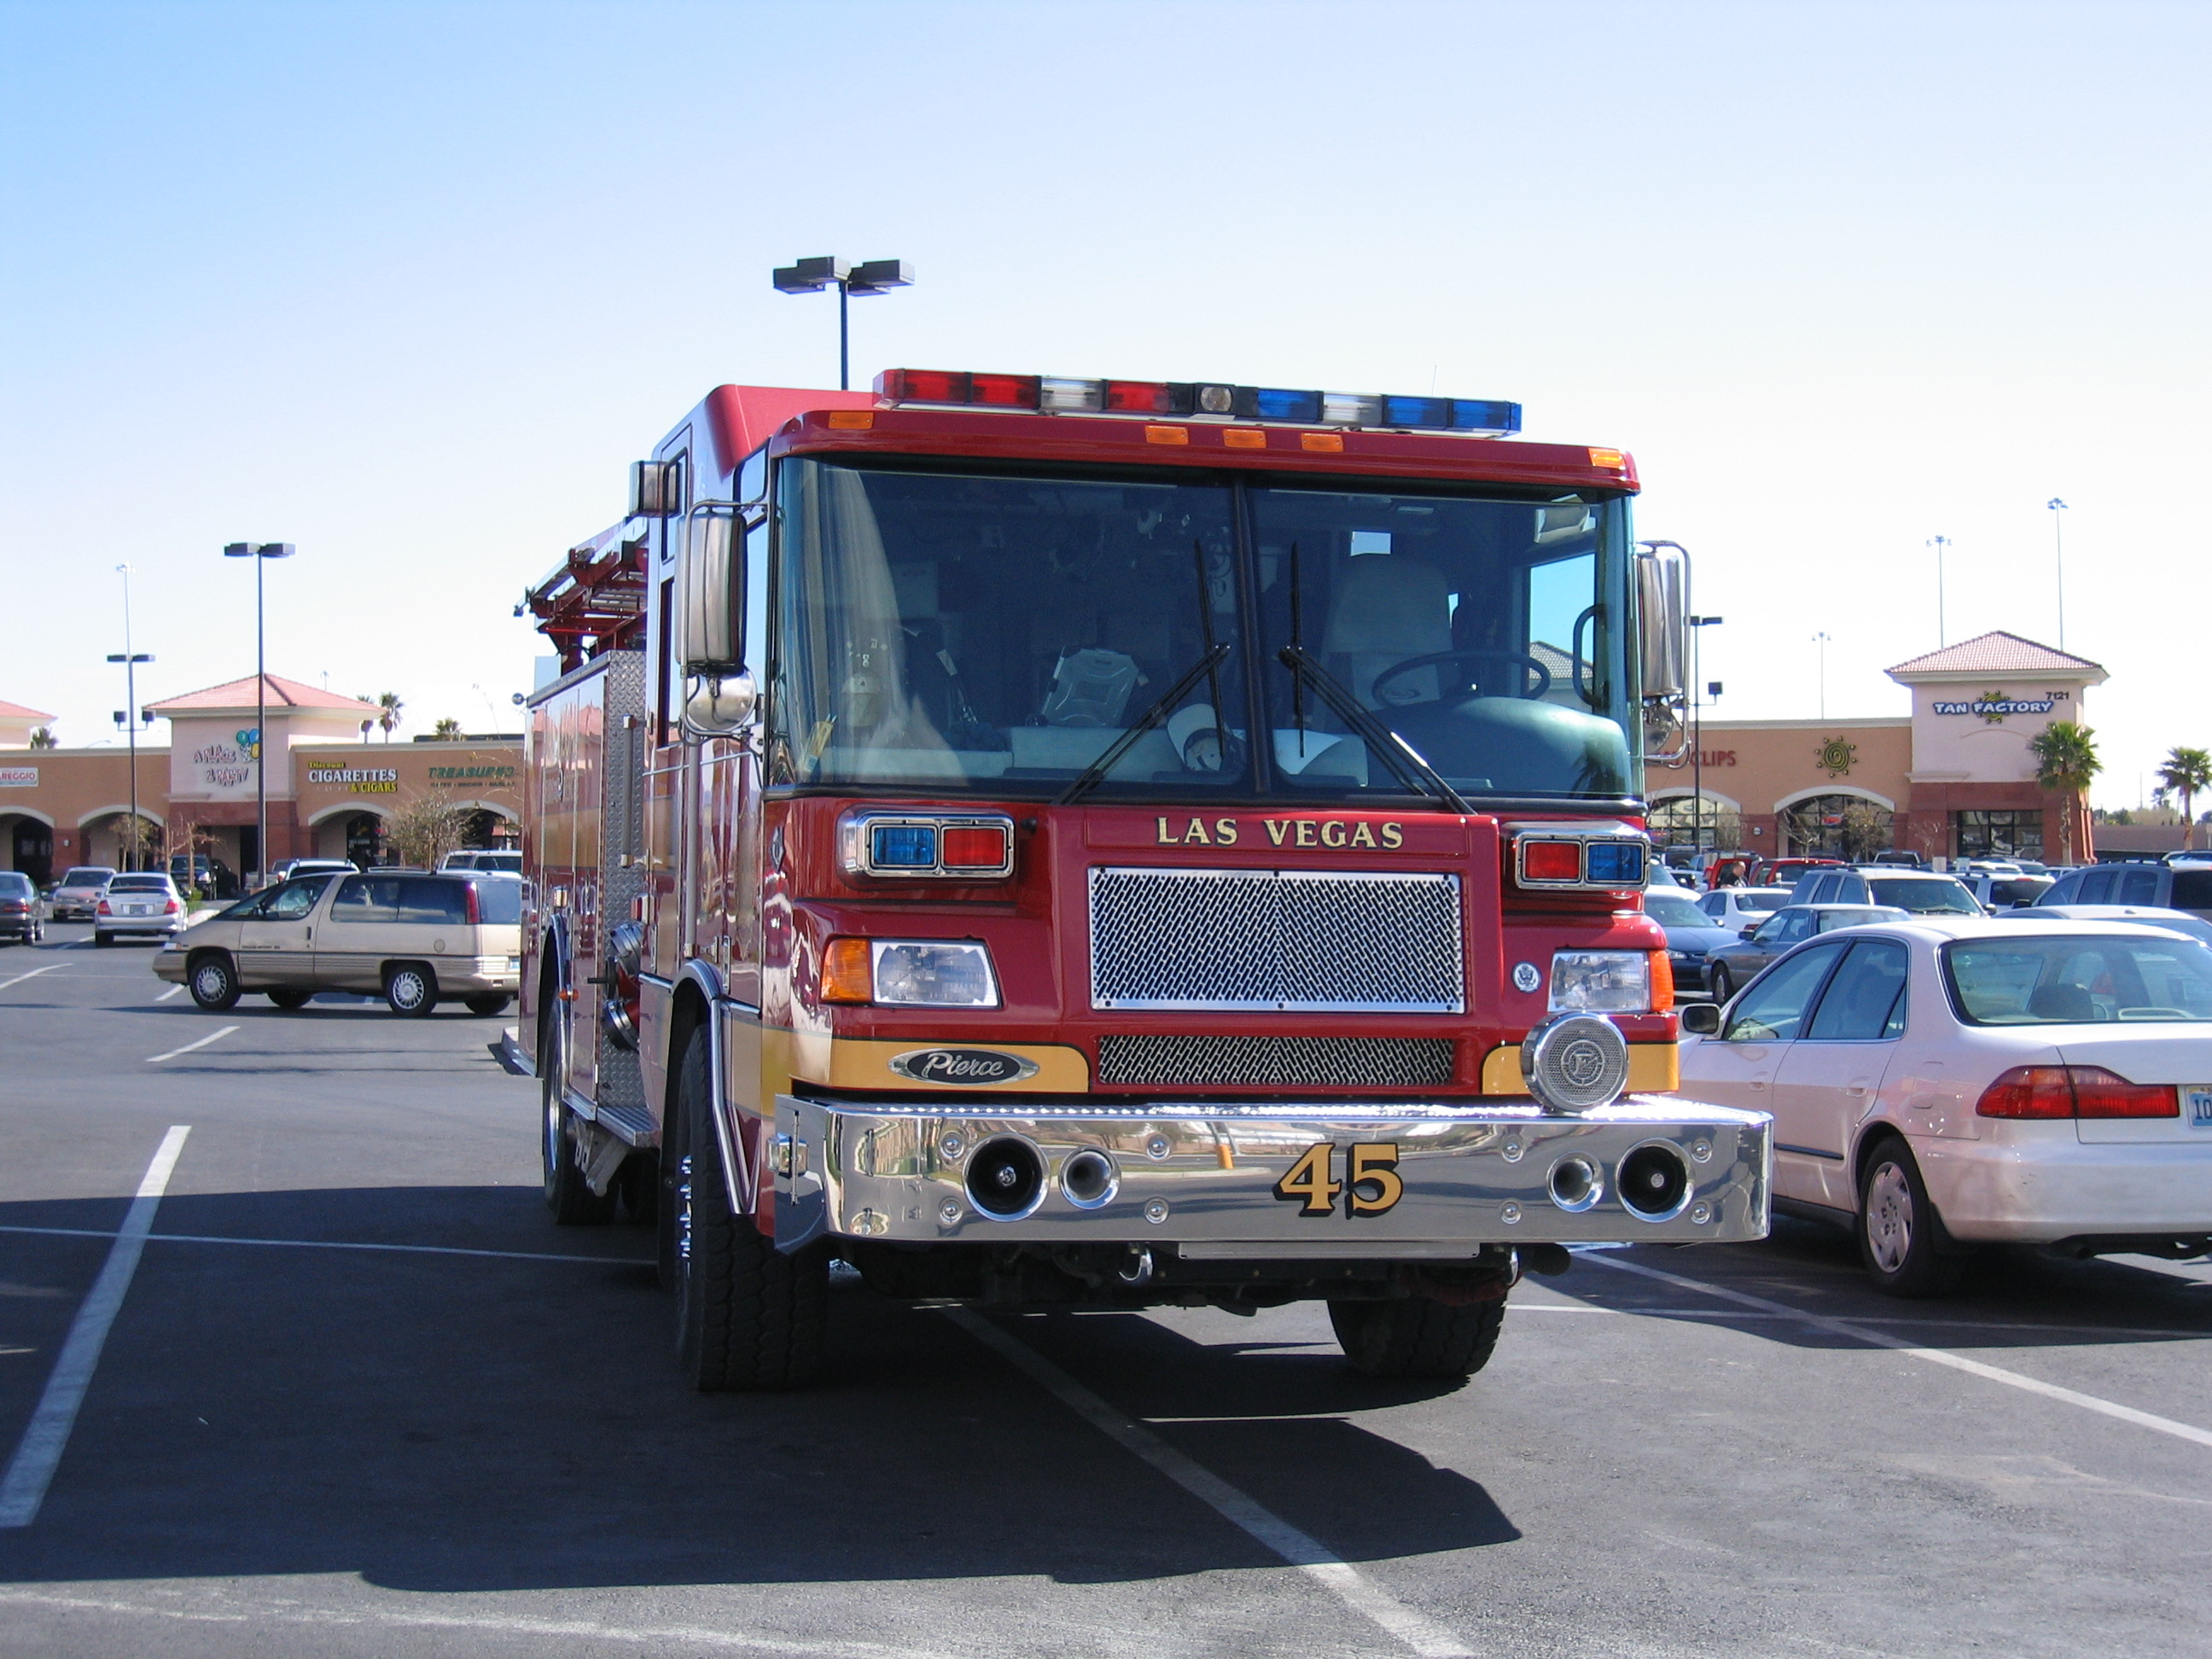 File:Las Vegas fire engine.JPG - Wikimedia Commons